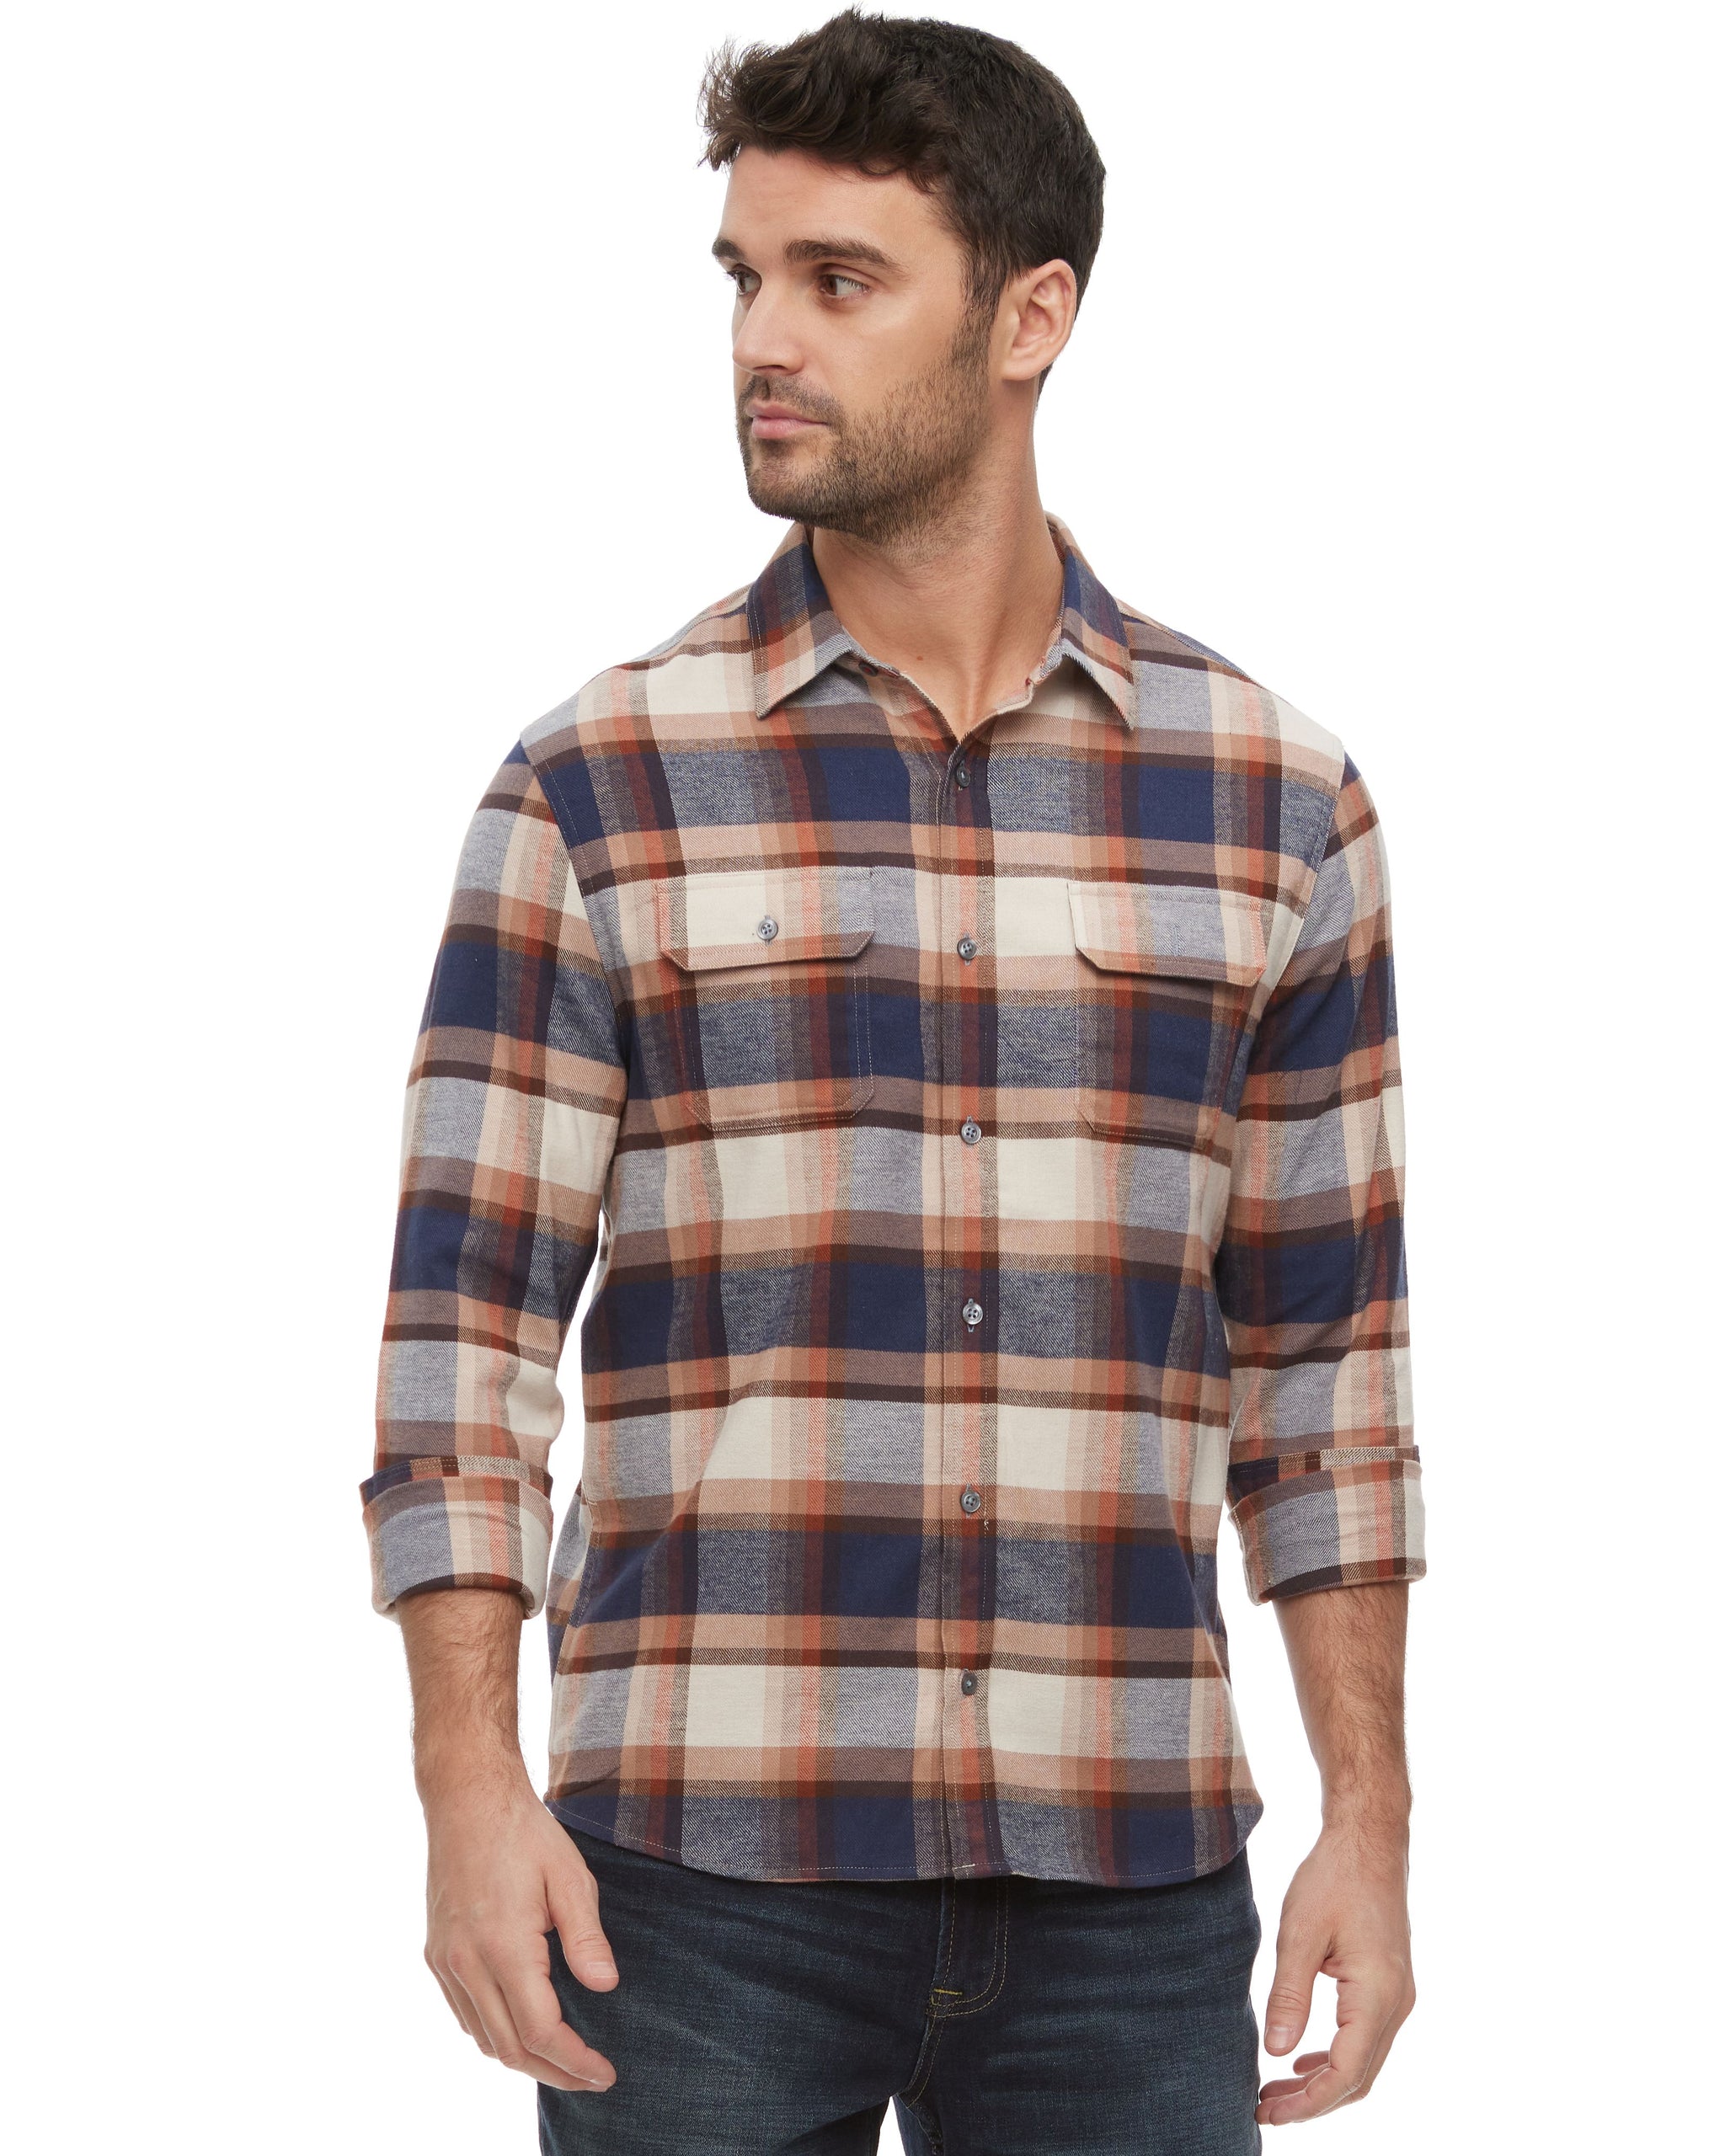 Transitional Flannel Shirt, Men's Shirts